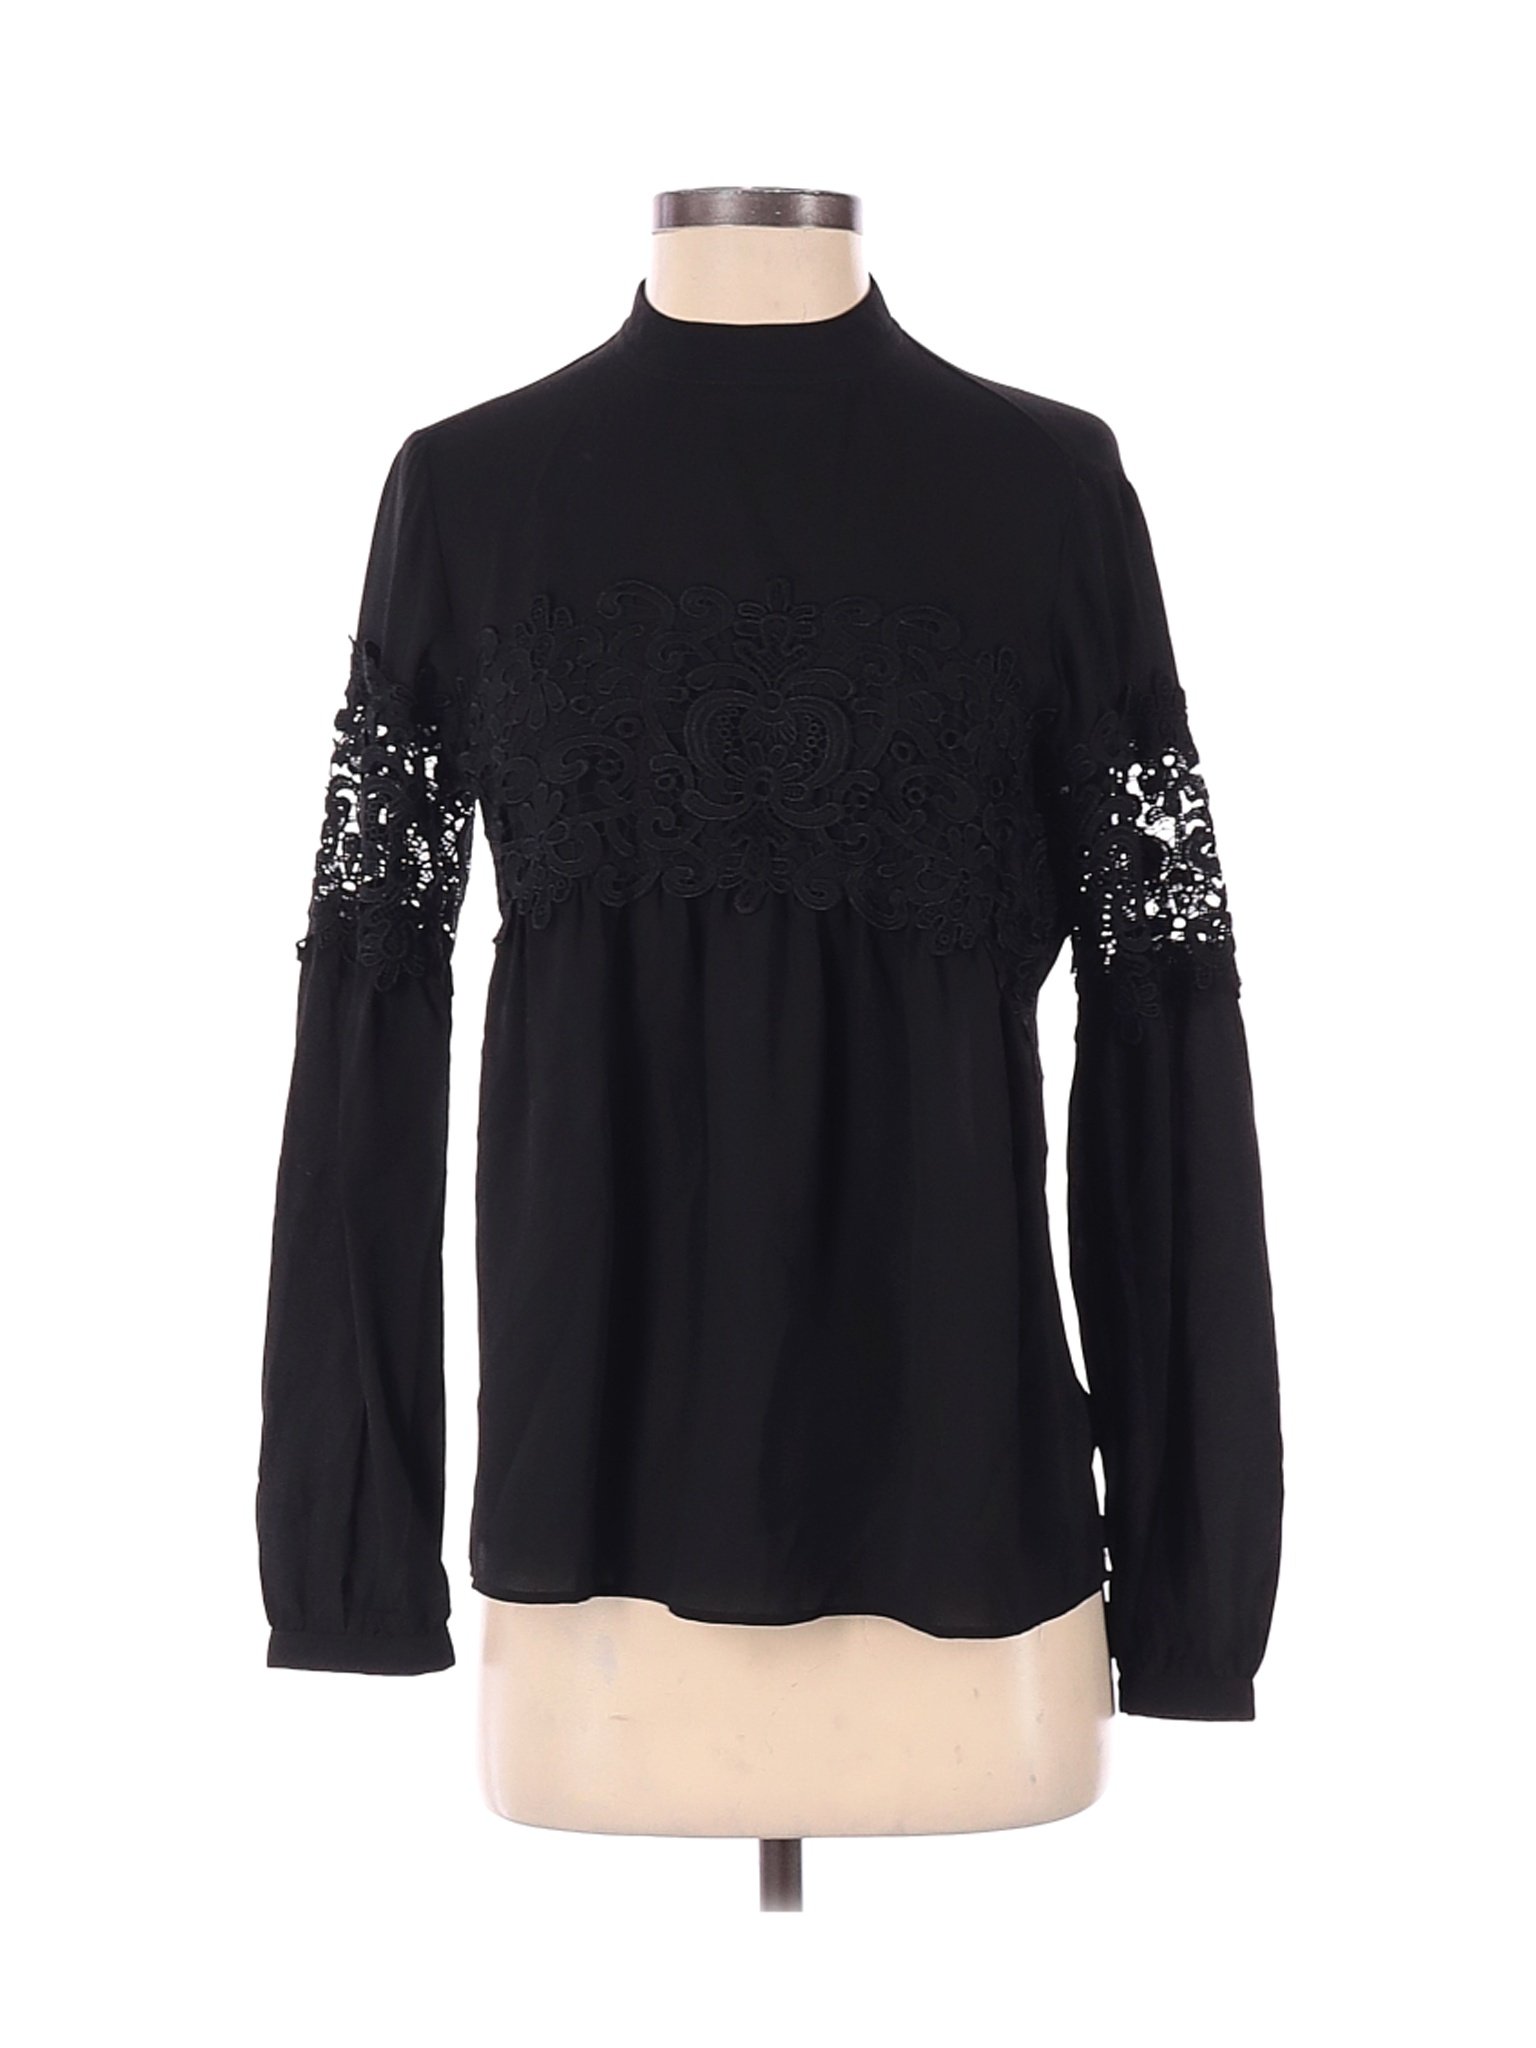 Express Outlet Women Black Long Sleeve Blouse XS | eBay